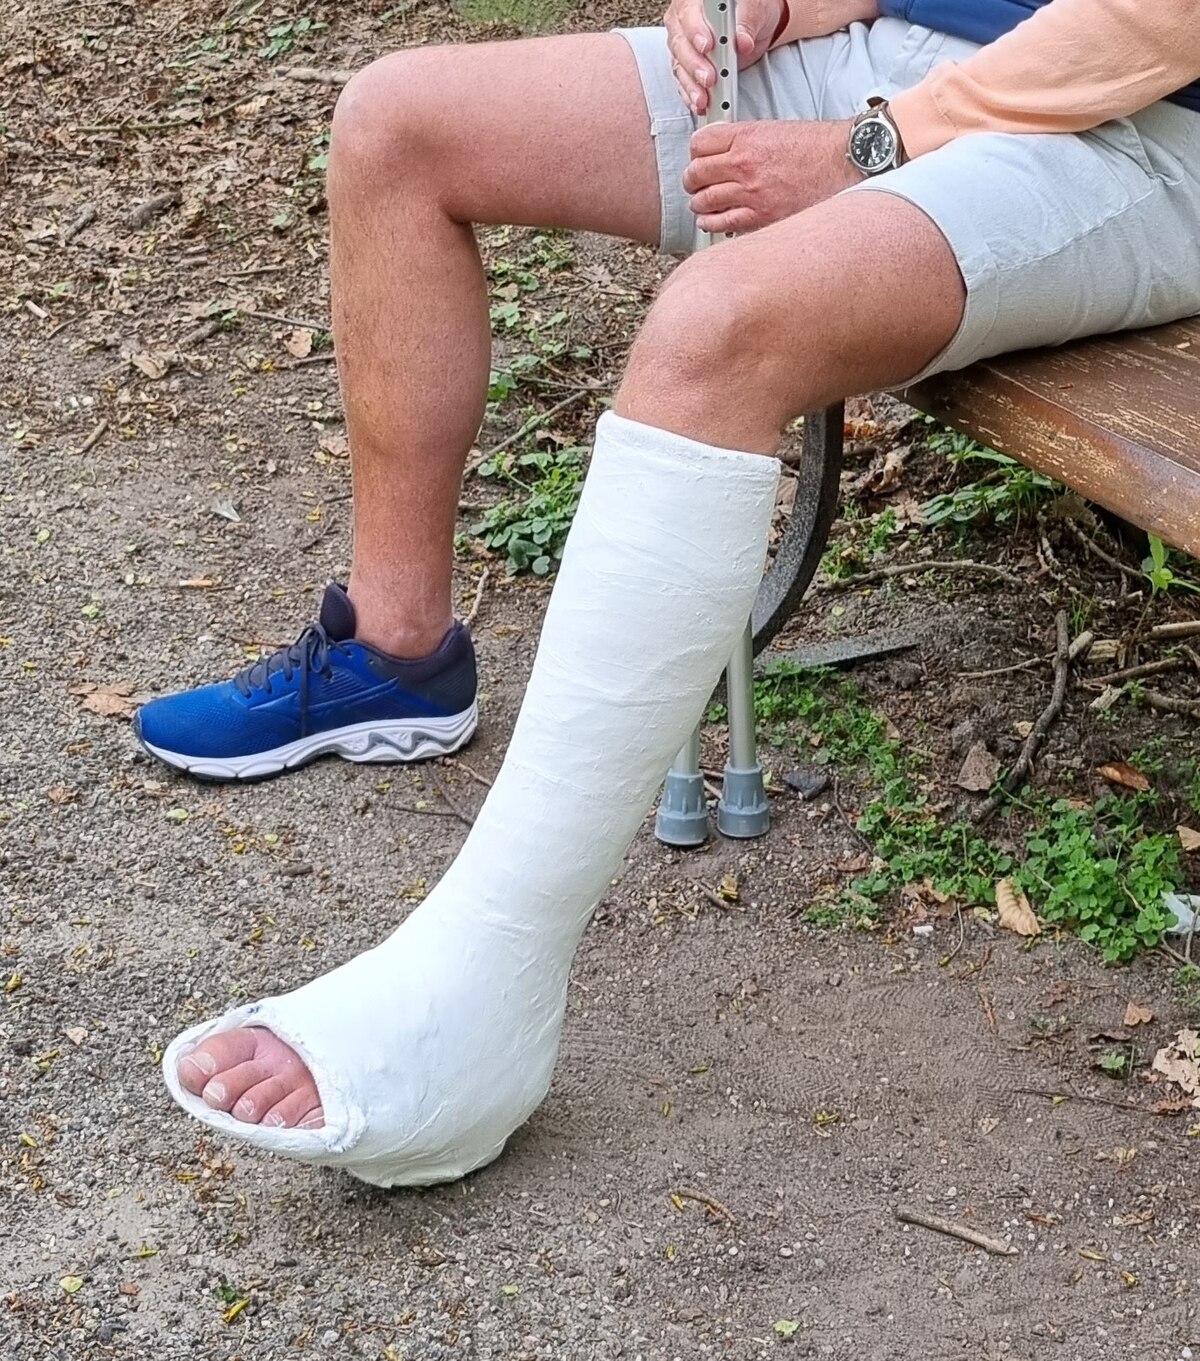 File:Plaster of Paris short leg walking cast with toeplate.jpg - Wikipedia